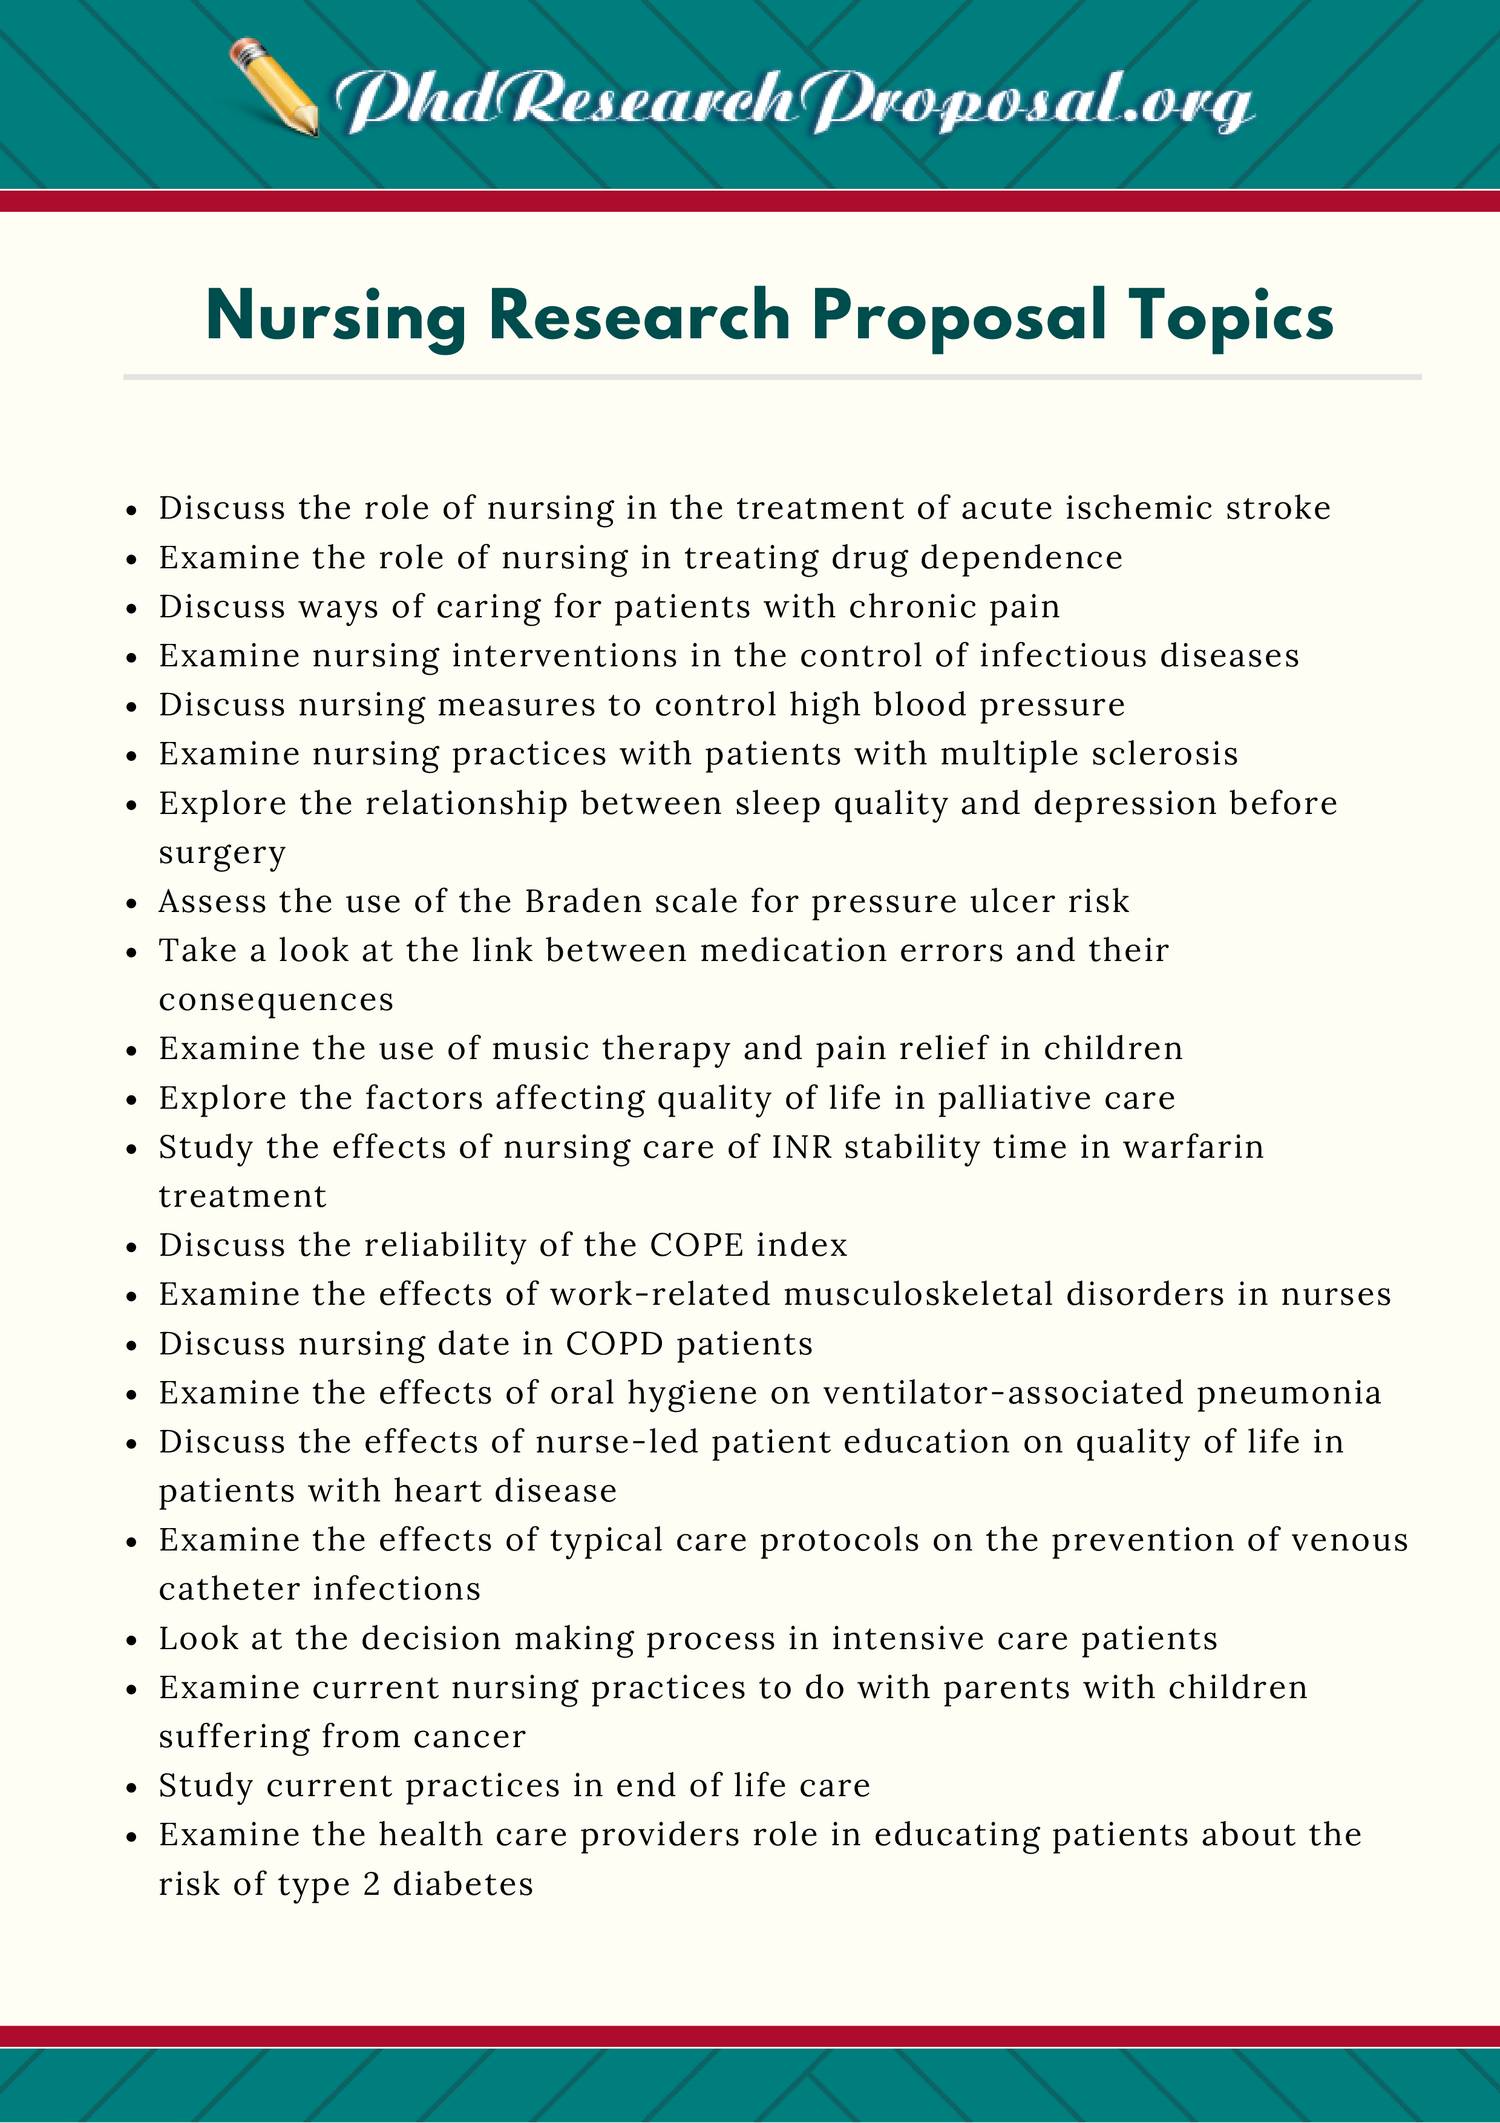 research topics on public health nursing